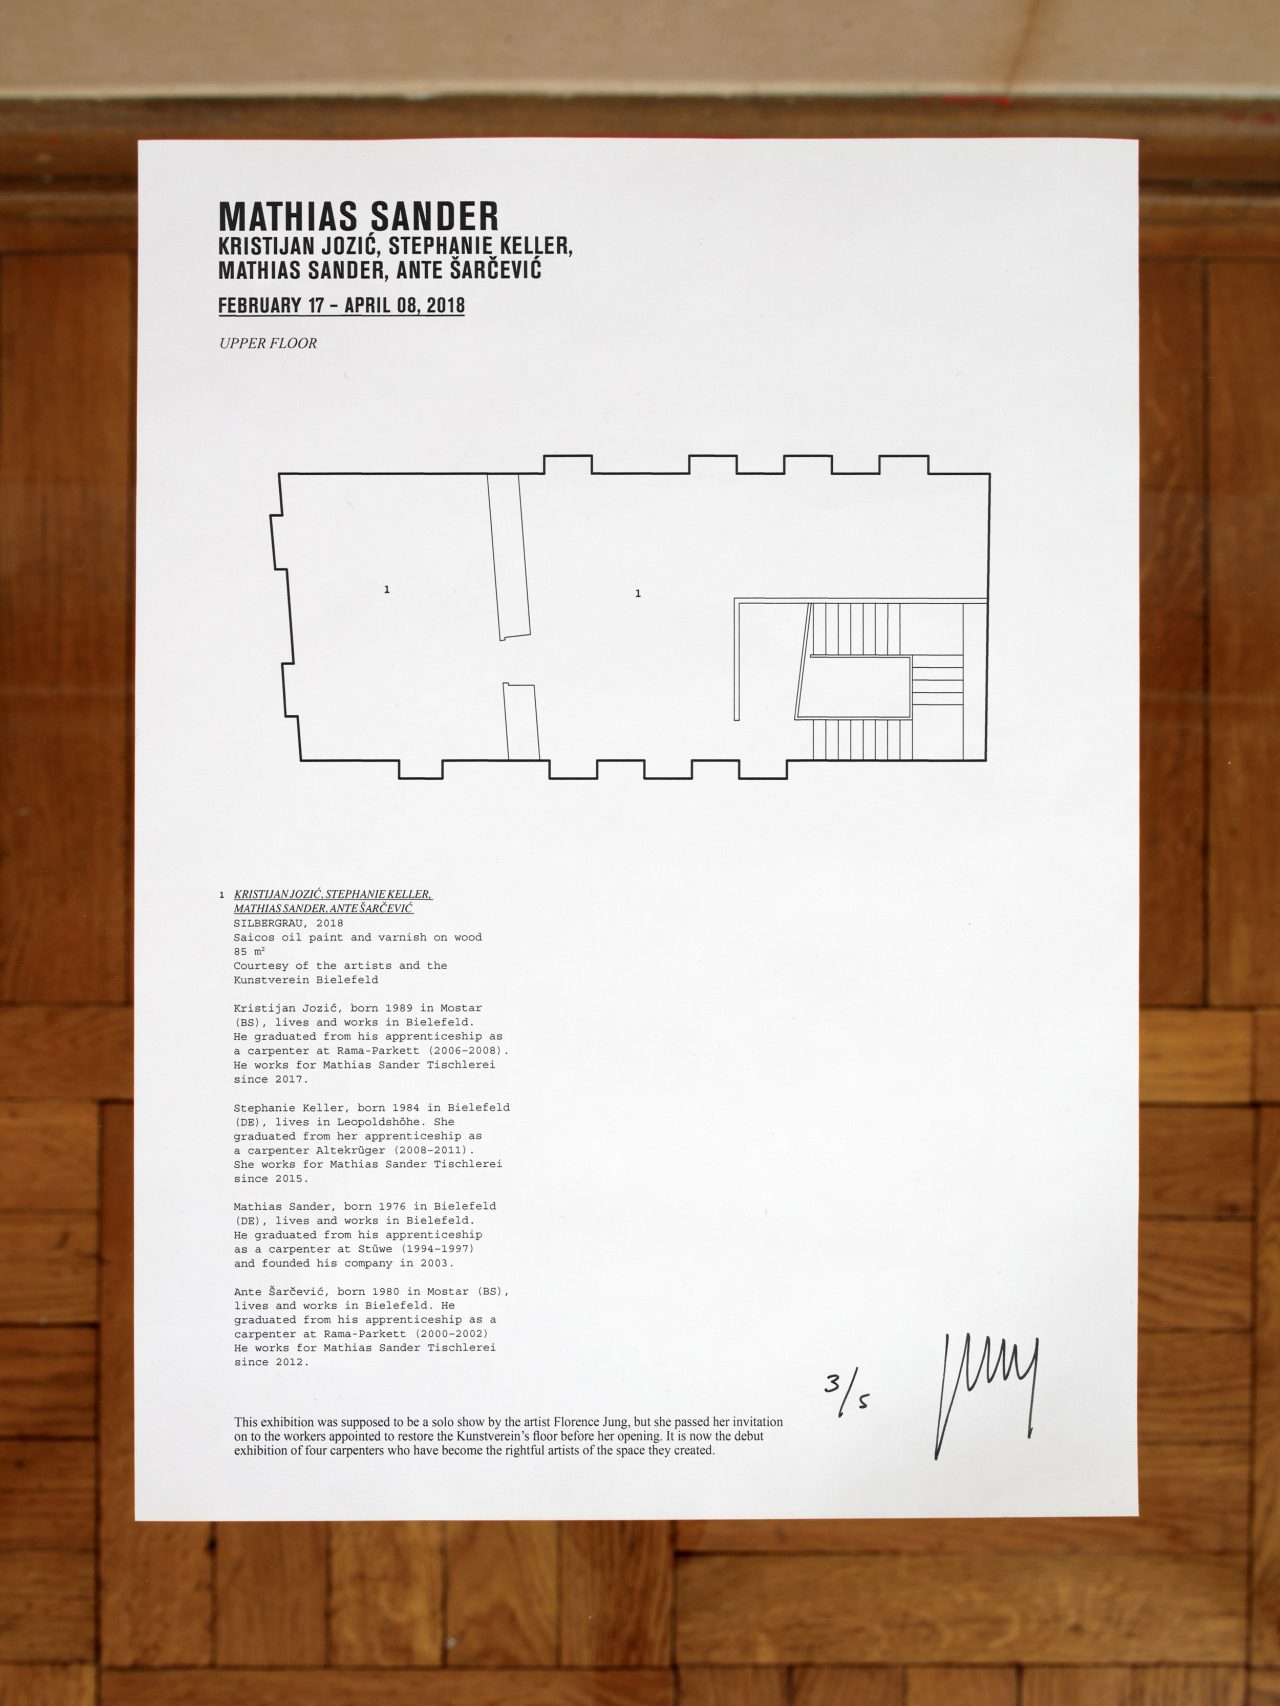 Florence Jung, Mathias Sander Exhibition's Floor Plan (2018)